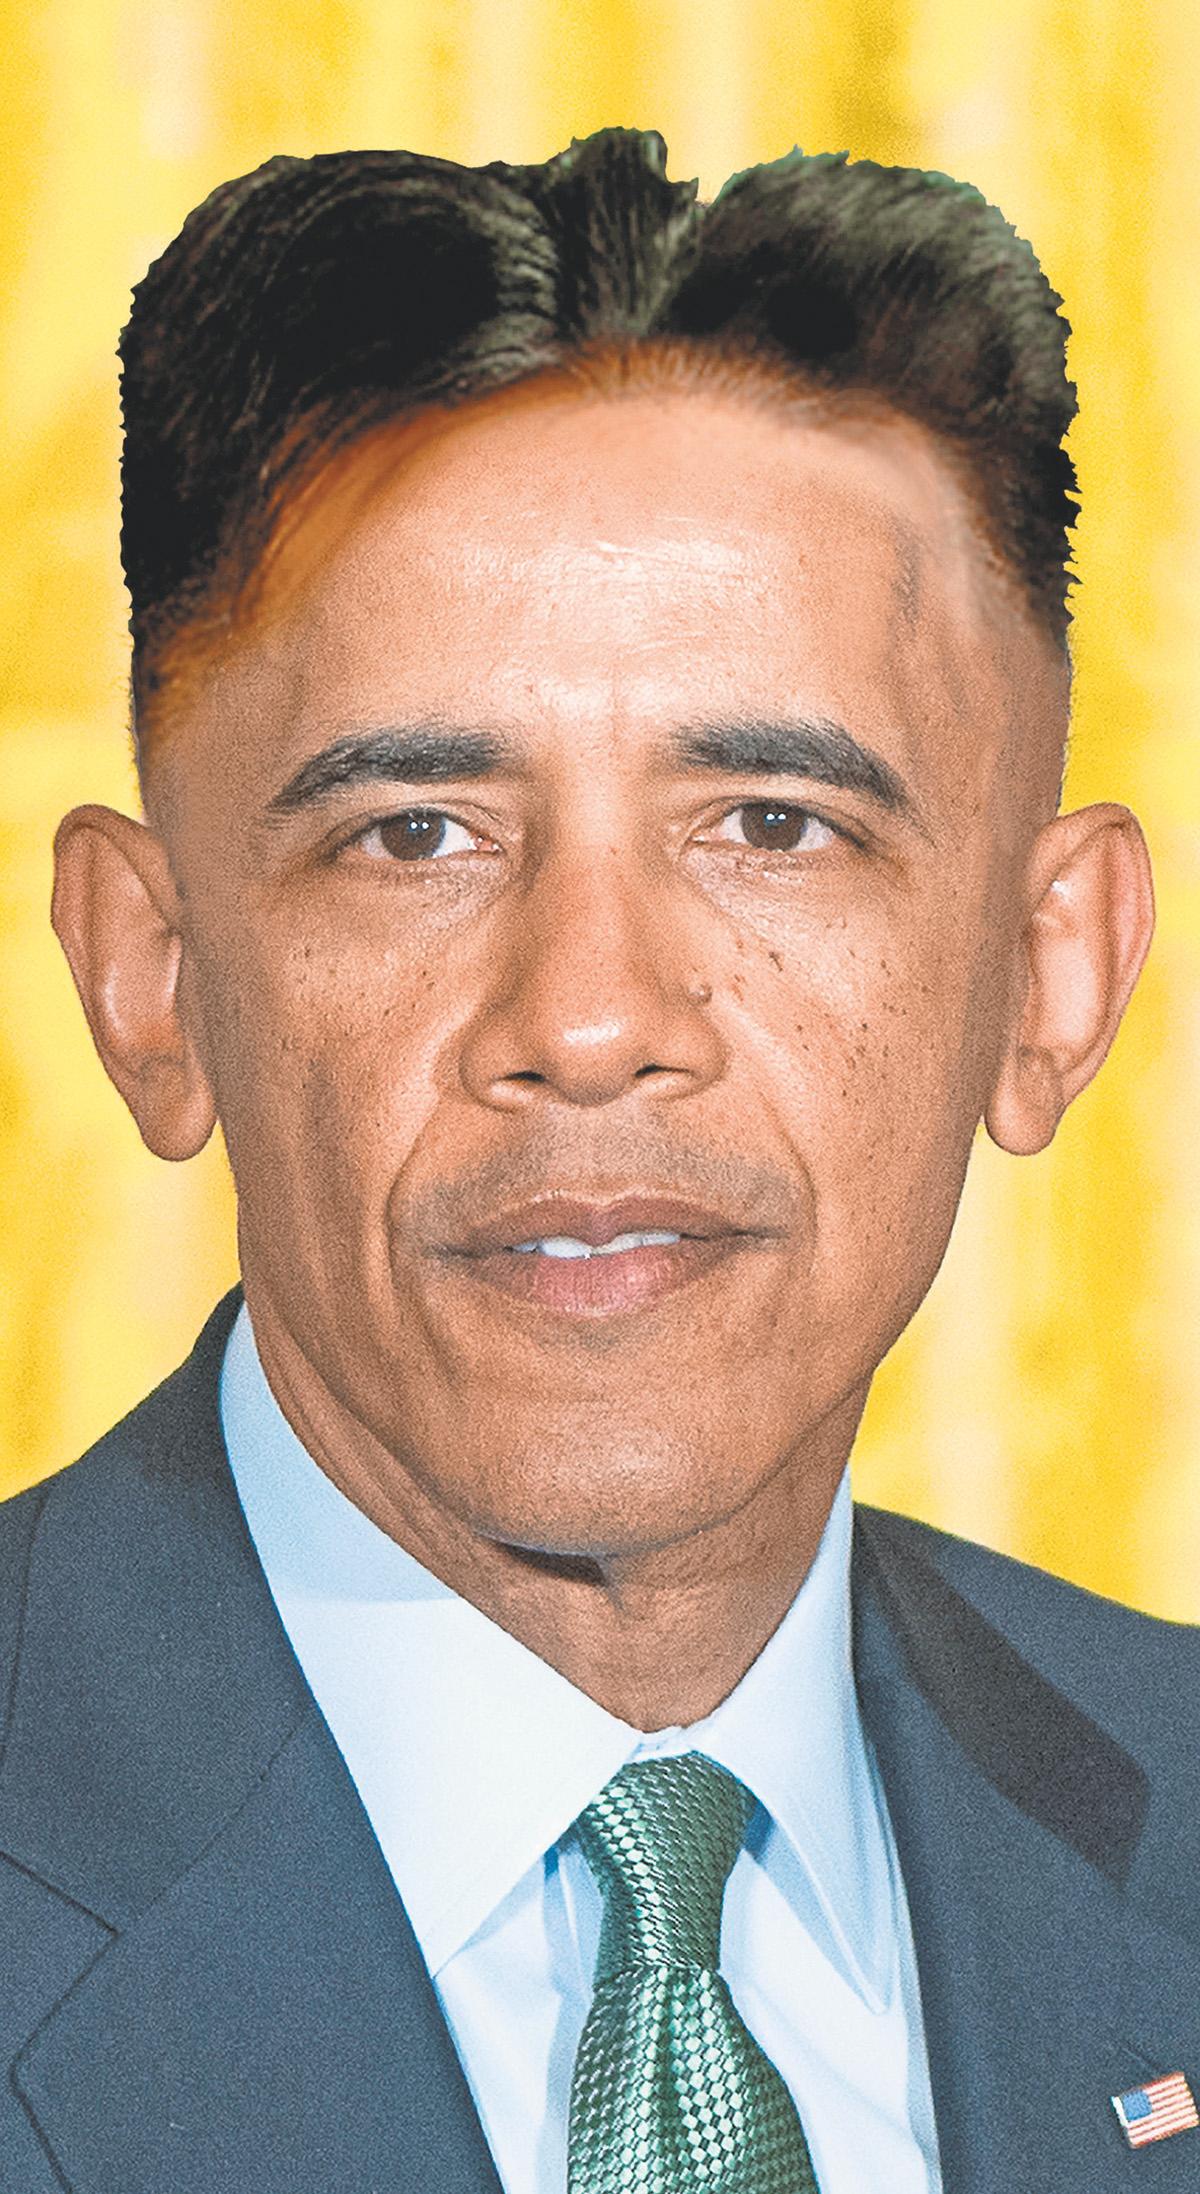 president-barack-obama-kim-jong-un-haircut-north-korea